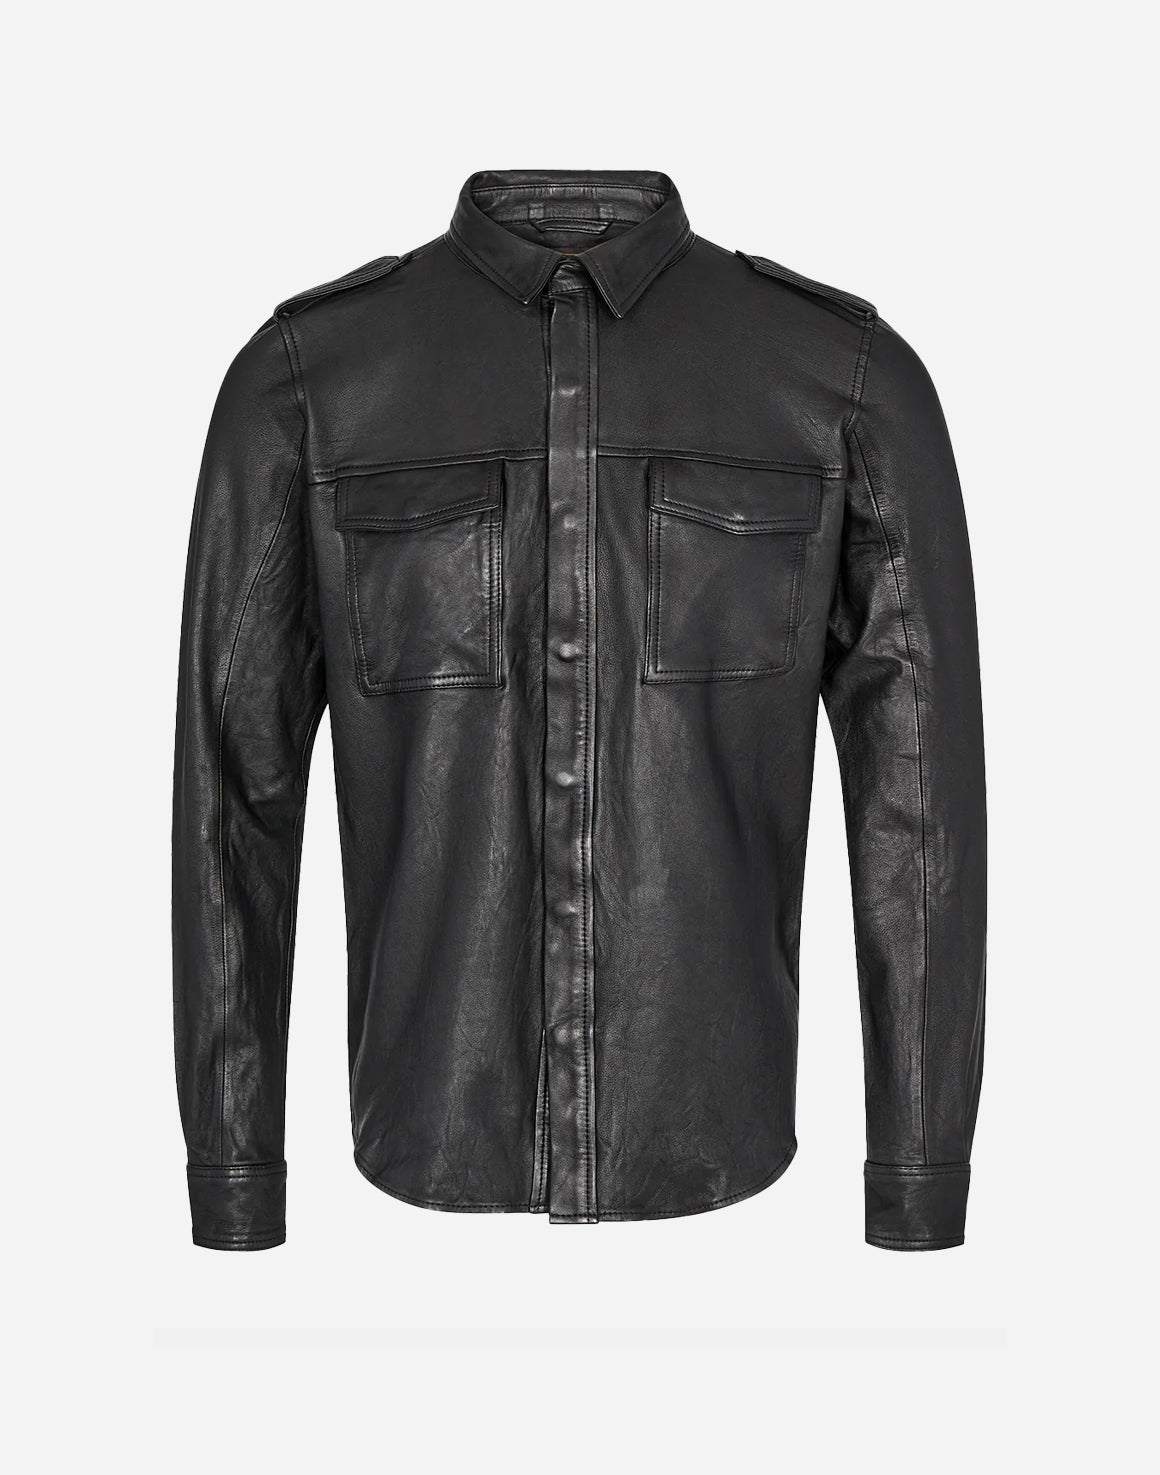 Ollie Leather Overshirt - Sort - Mos Mosh Gallery - Kul og Koks